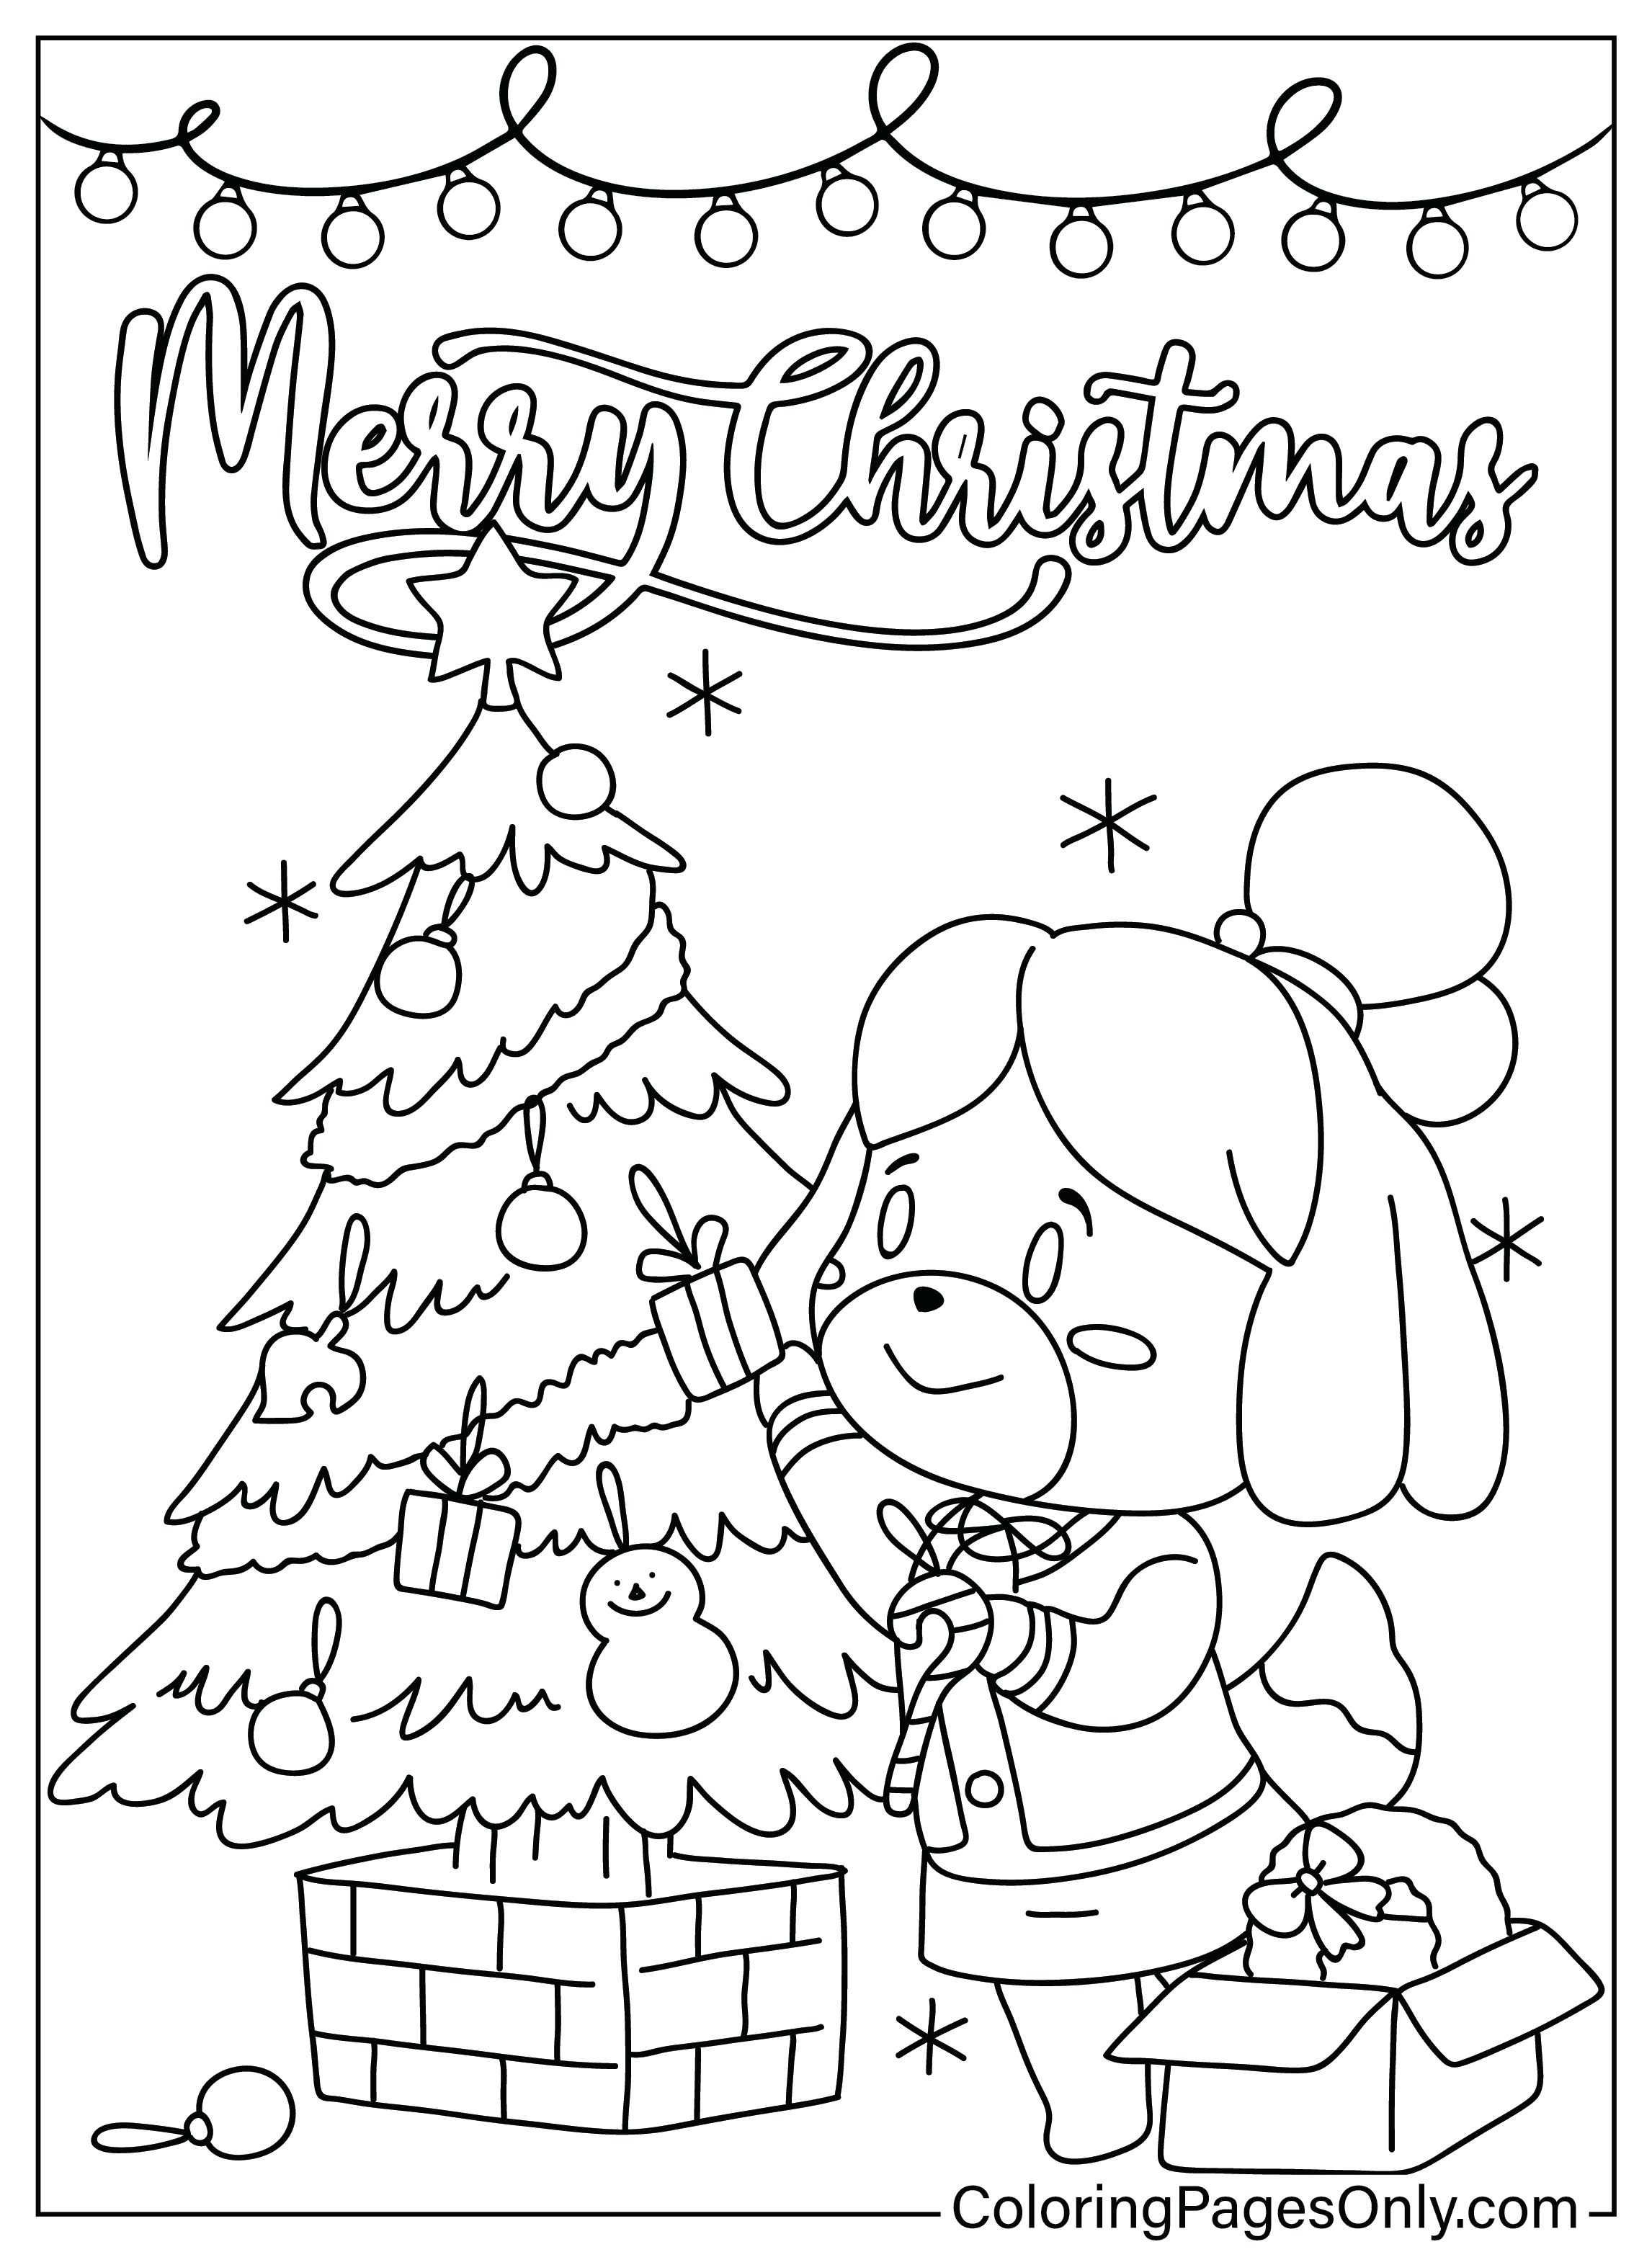 Free Christmas Cartoon Coloring Page from Christmas Cartoon